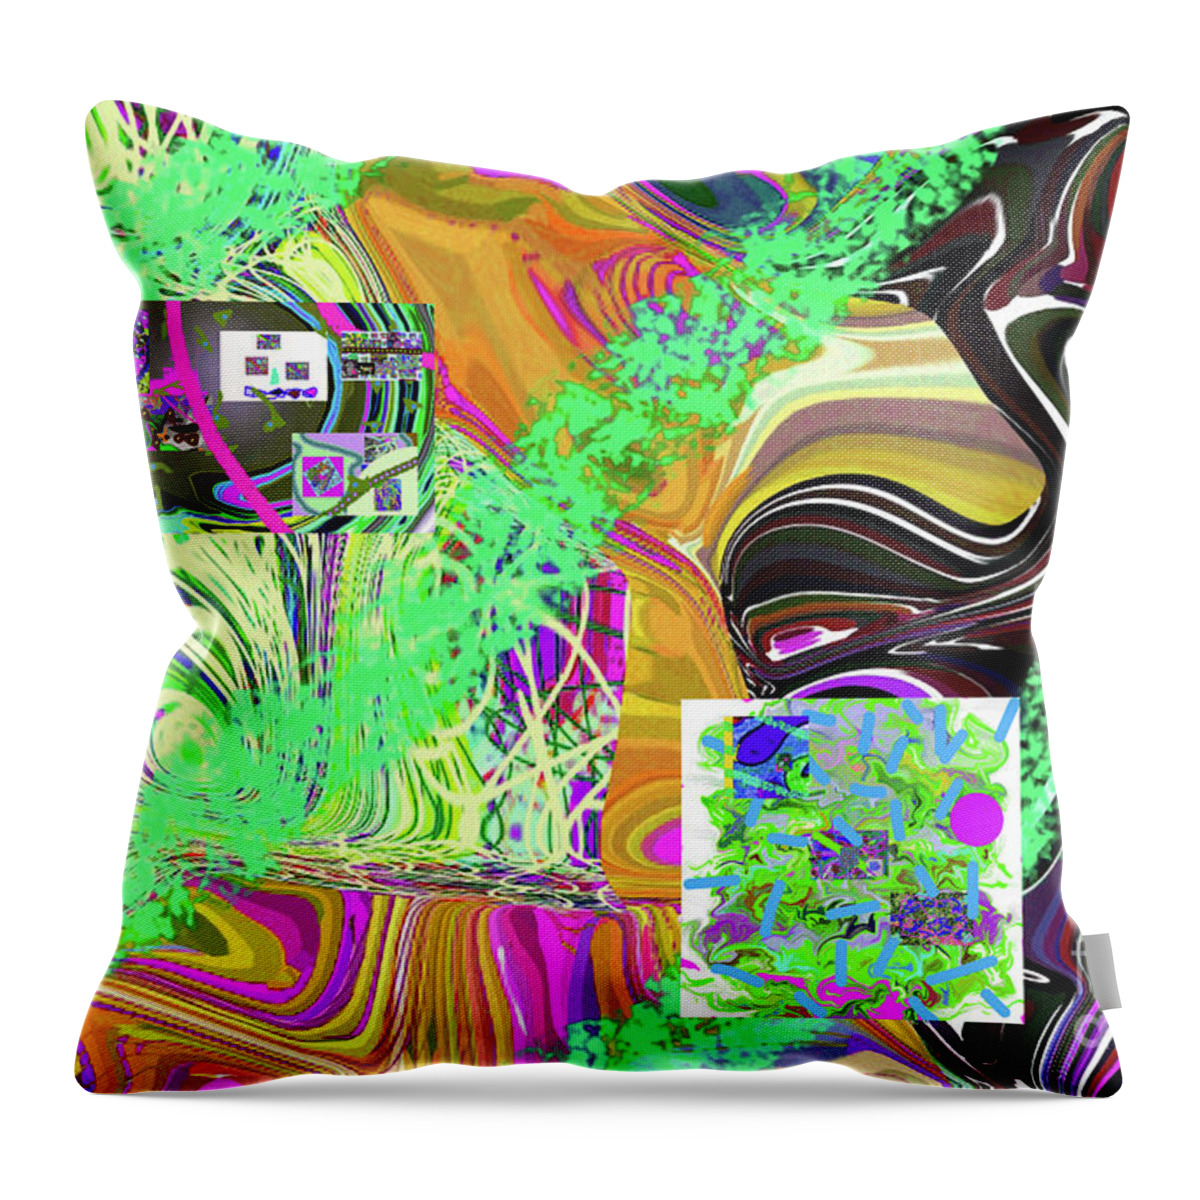 Walter Paul Bebirian Throw Pillow featuring the digital art 7-15-2015babcdef by Walter Paul Bebirian